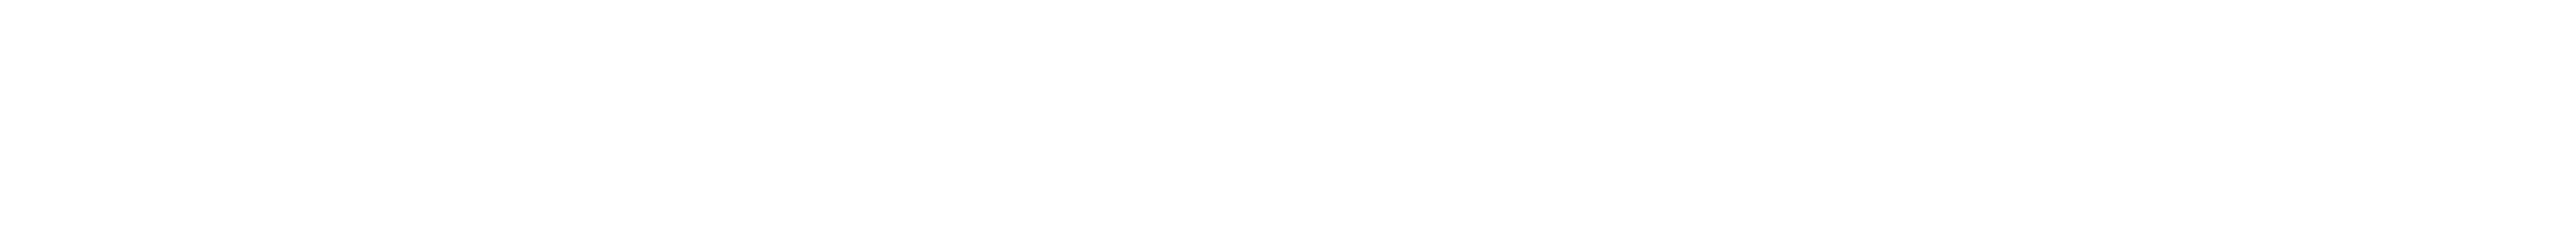 Lincoln Financial Field logo